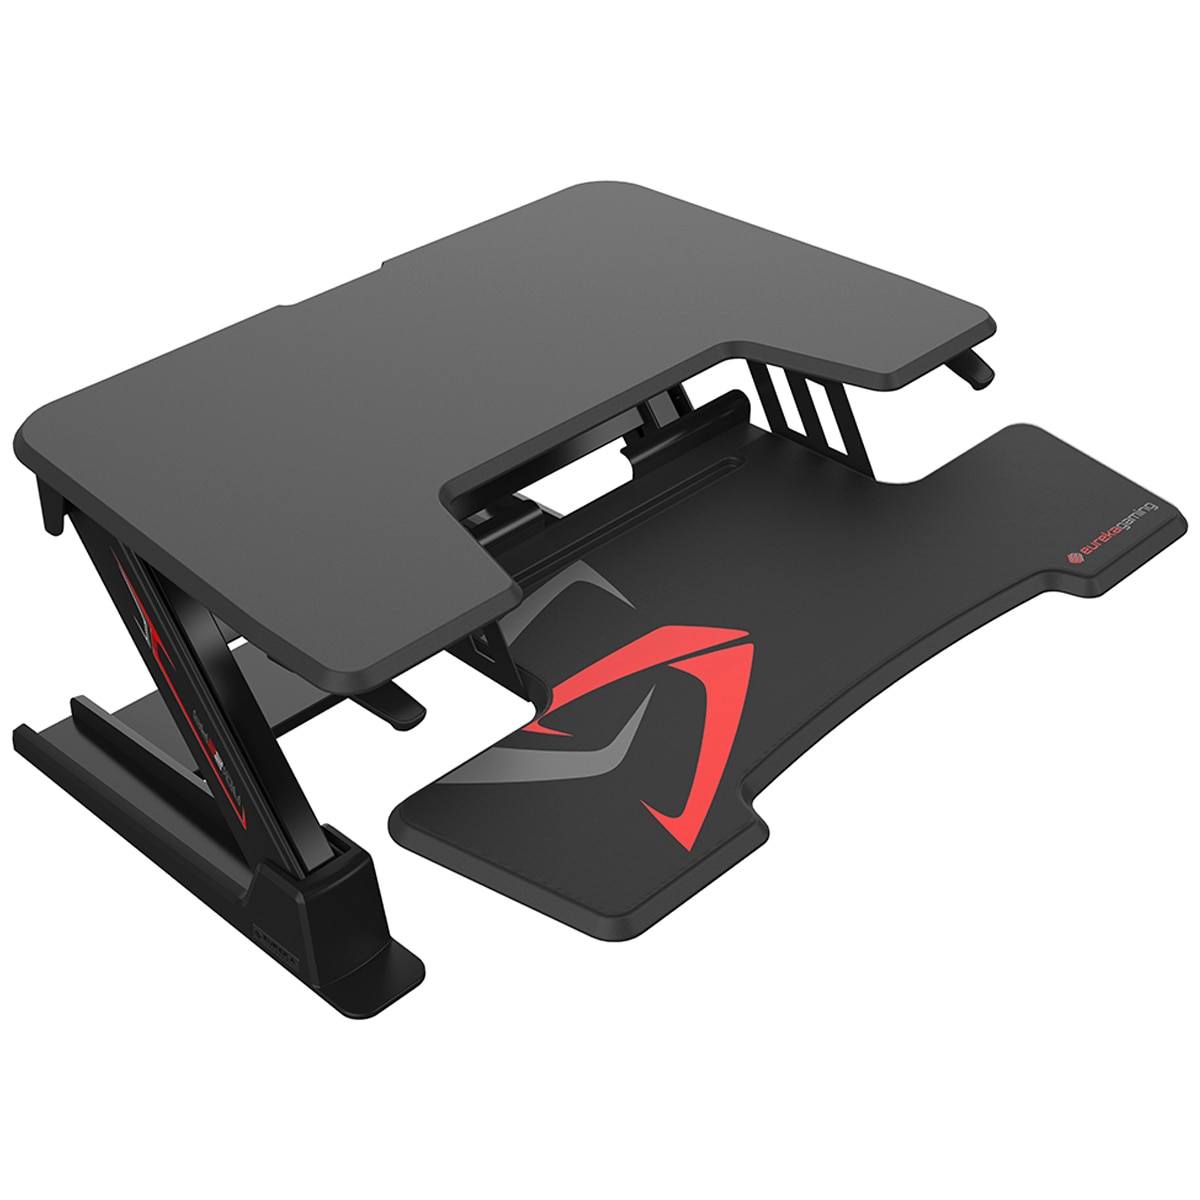 Eureka Ergonomic Height Adjustable Sit Stand Desk 36 Inch - Black